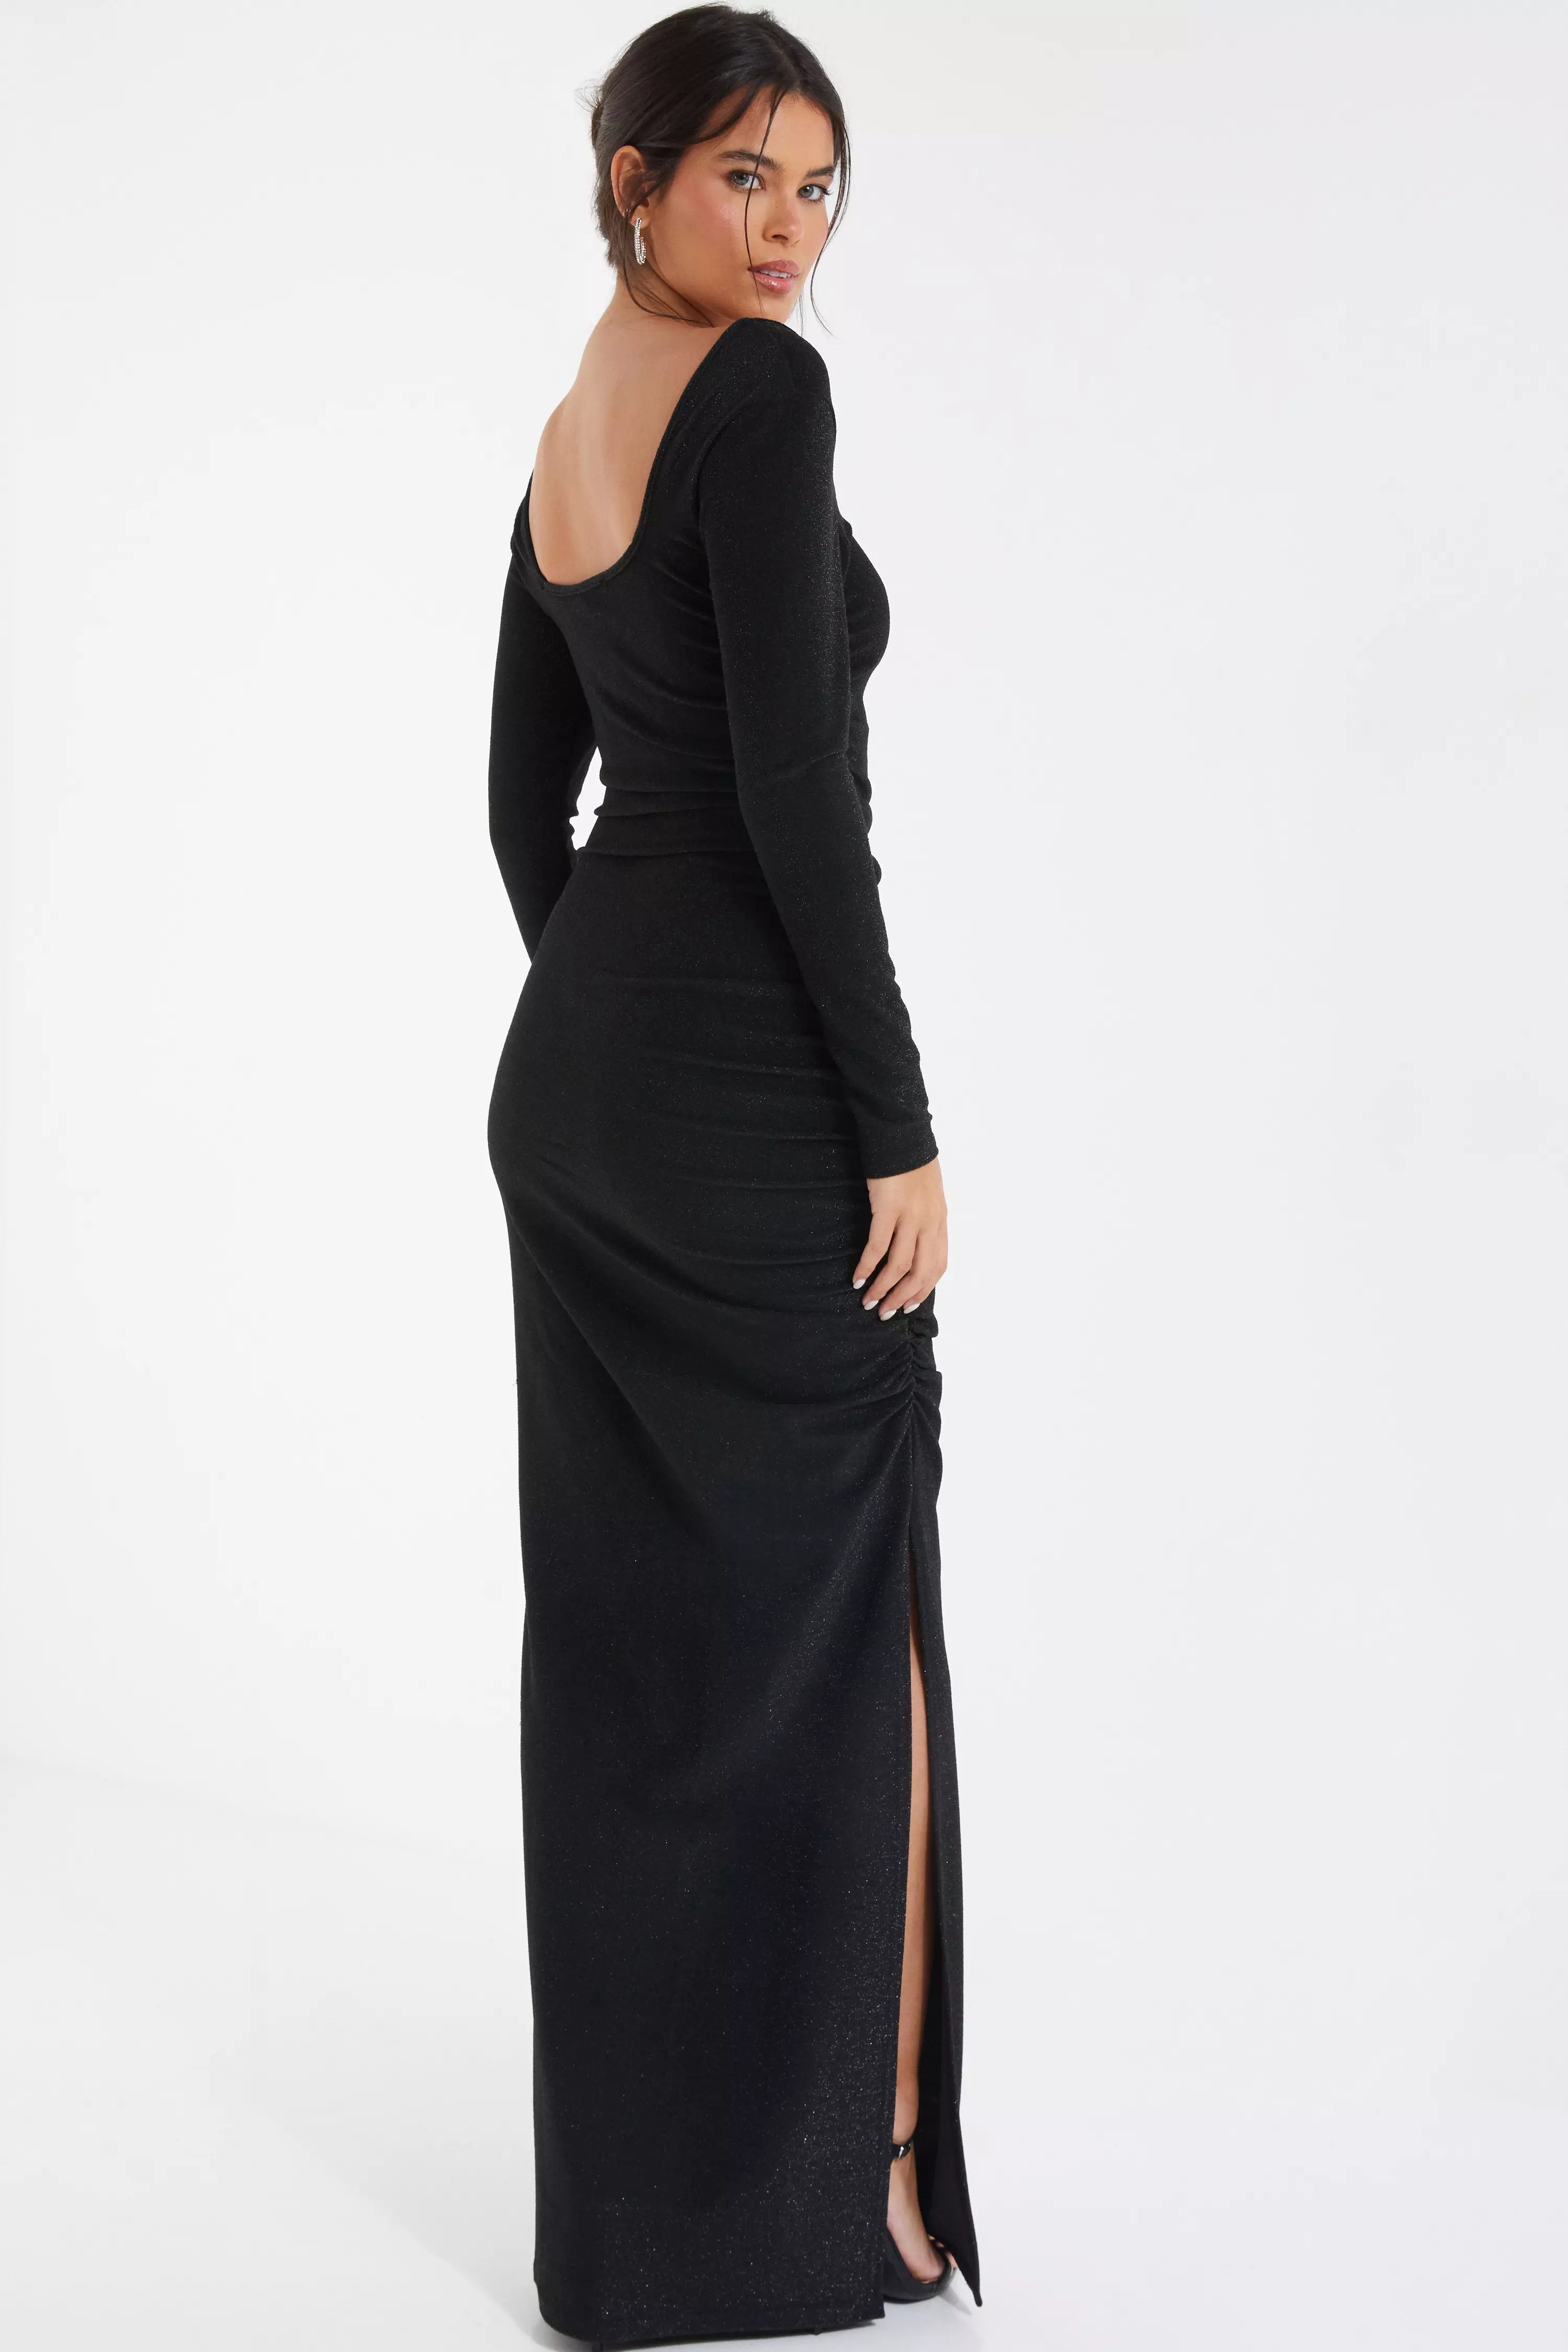 Black Shimmer Bodycon Maxi Dress